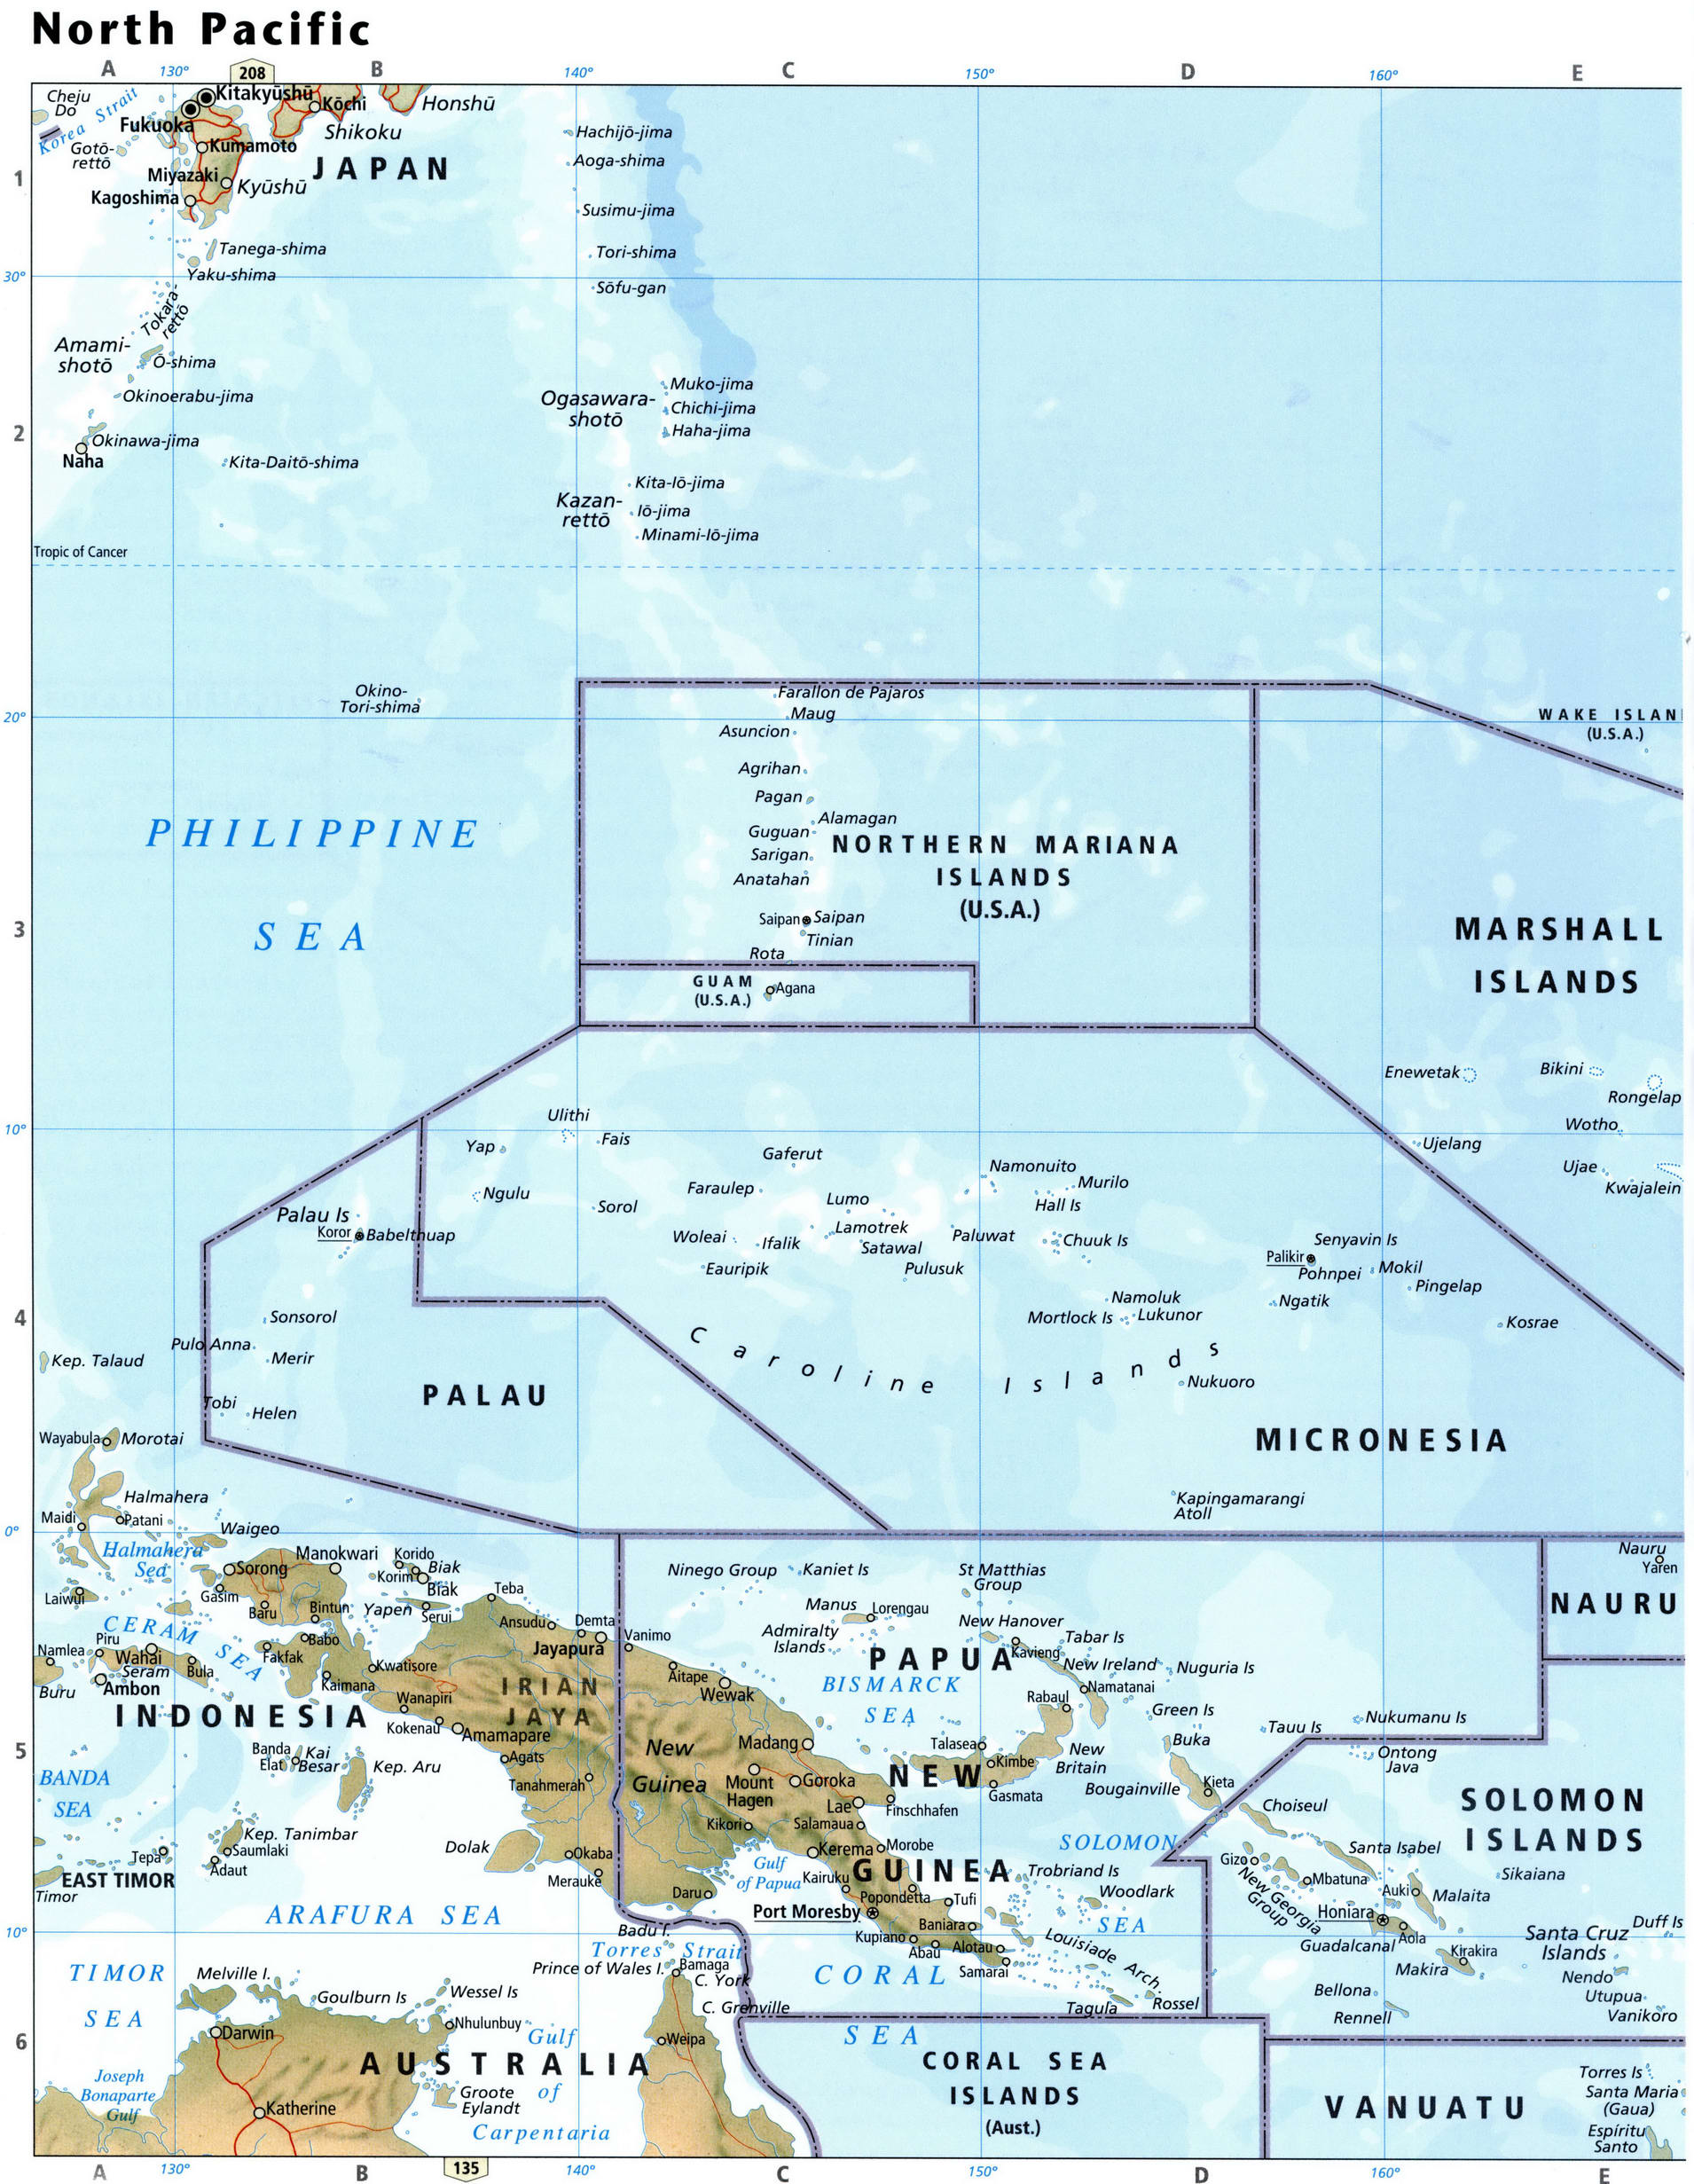 North Pacific ocean map